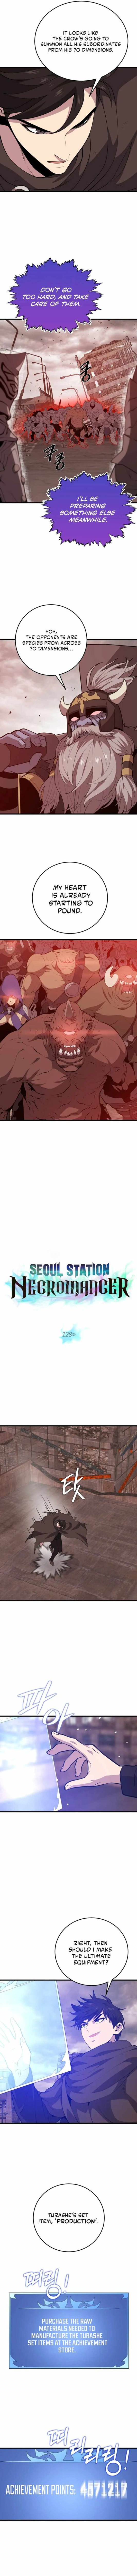 Seoul Stations Necromancer 128 2